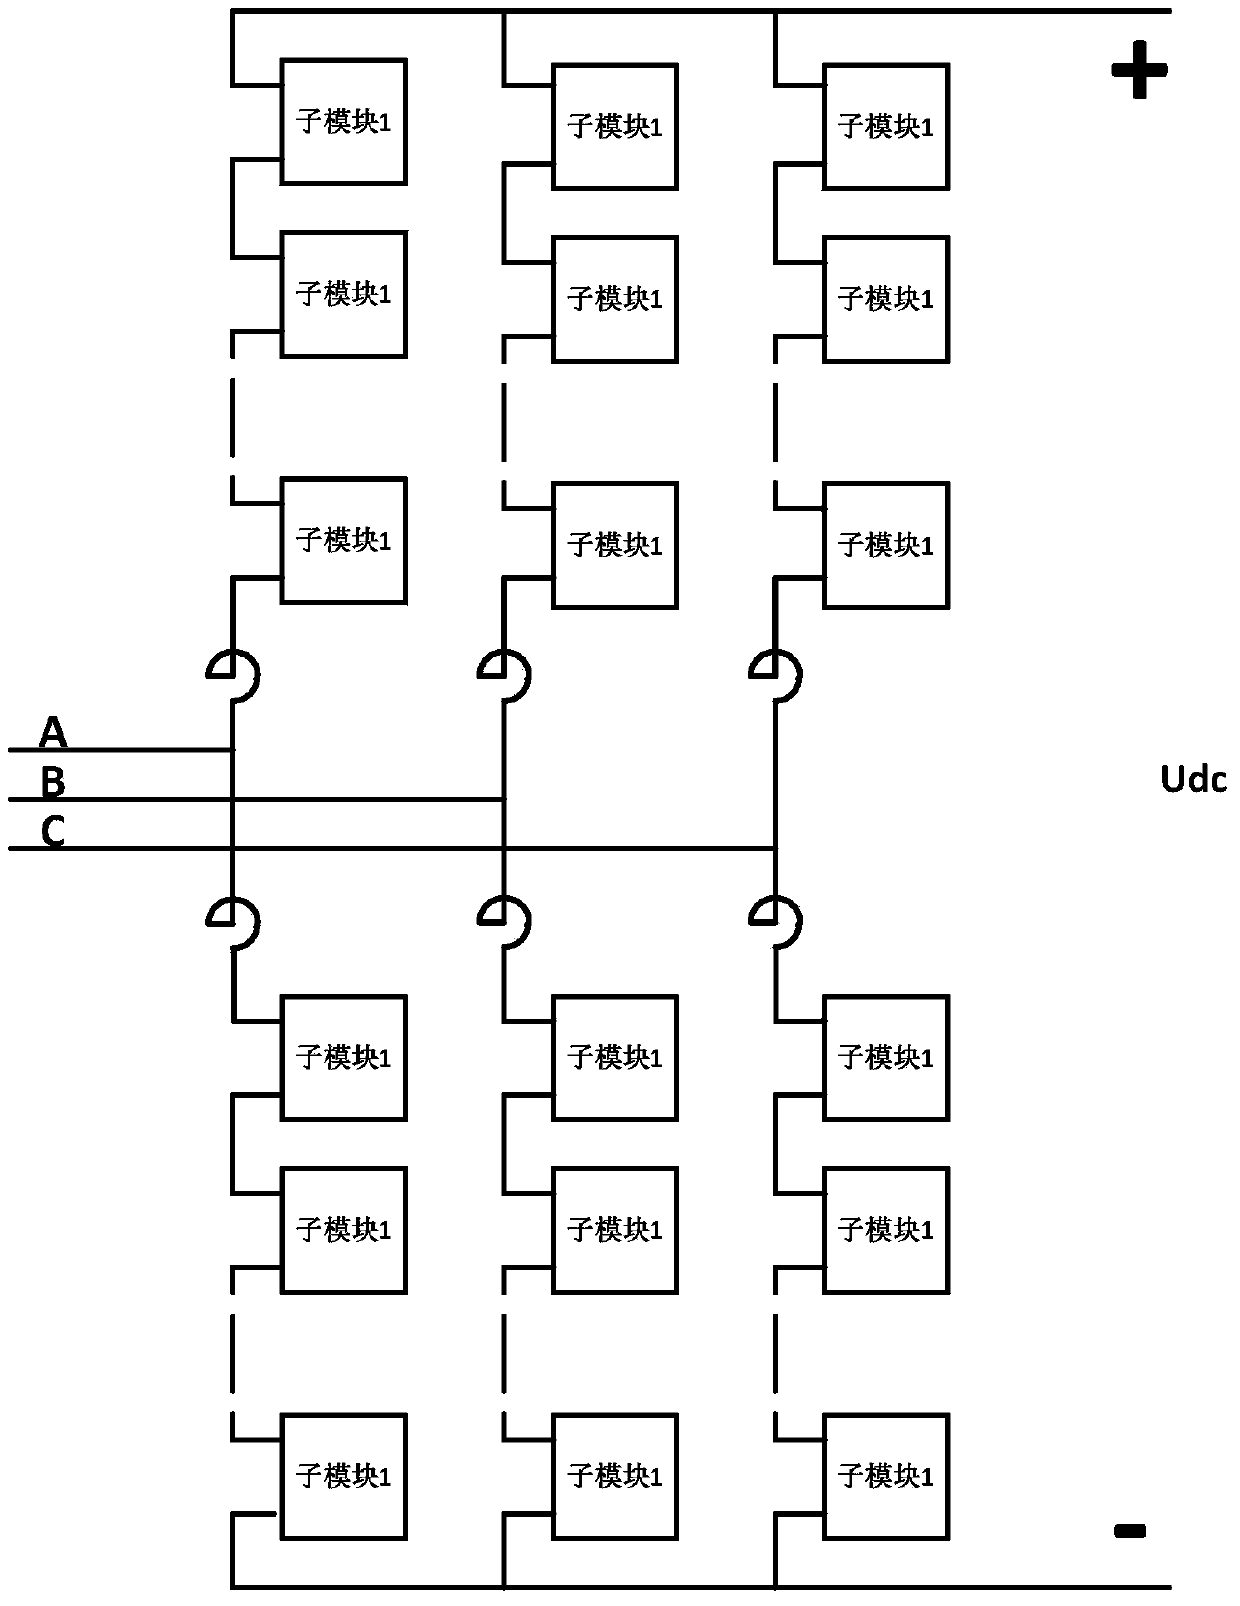 Sub module capacitance and voltage balancing and optimizing method for modularized multi-level converter